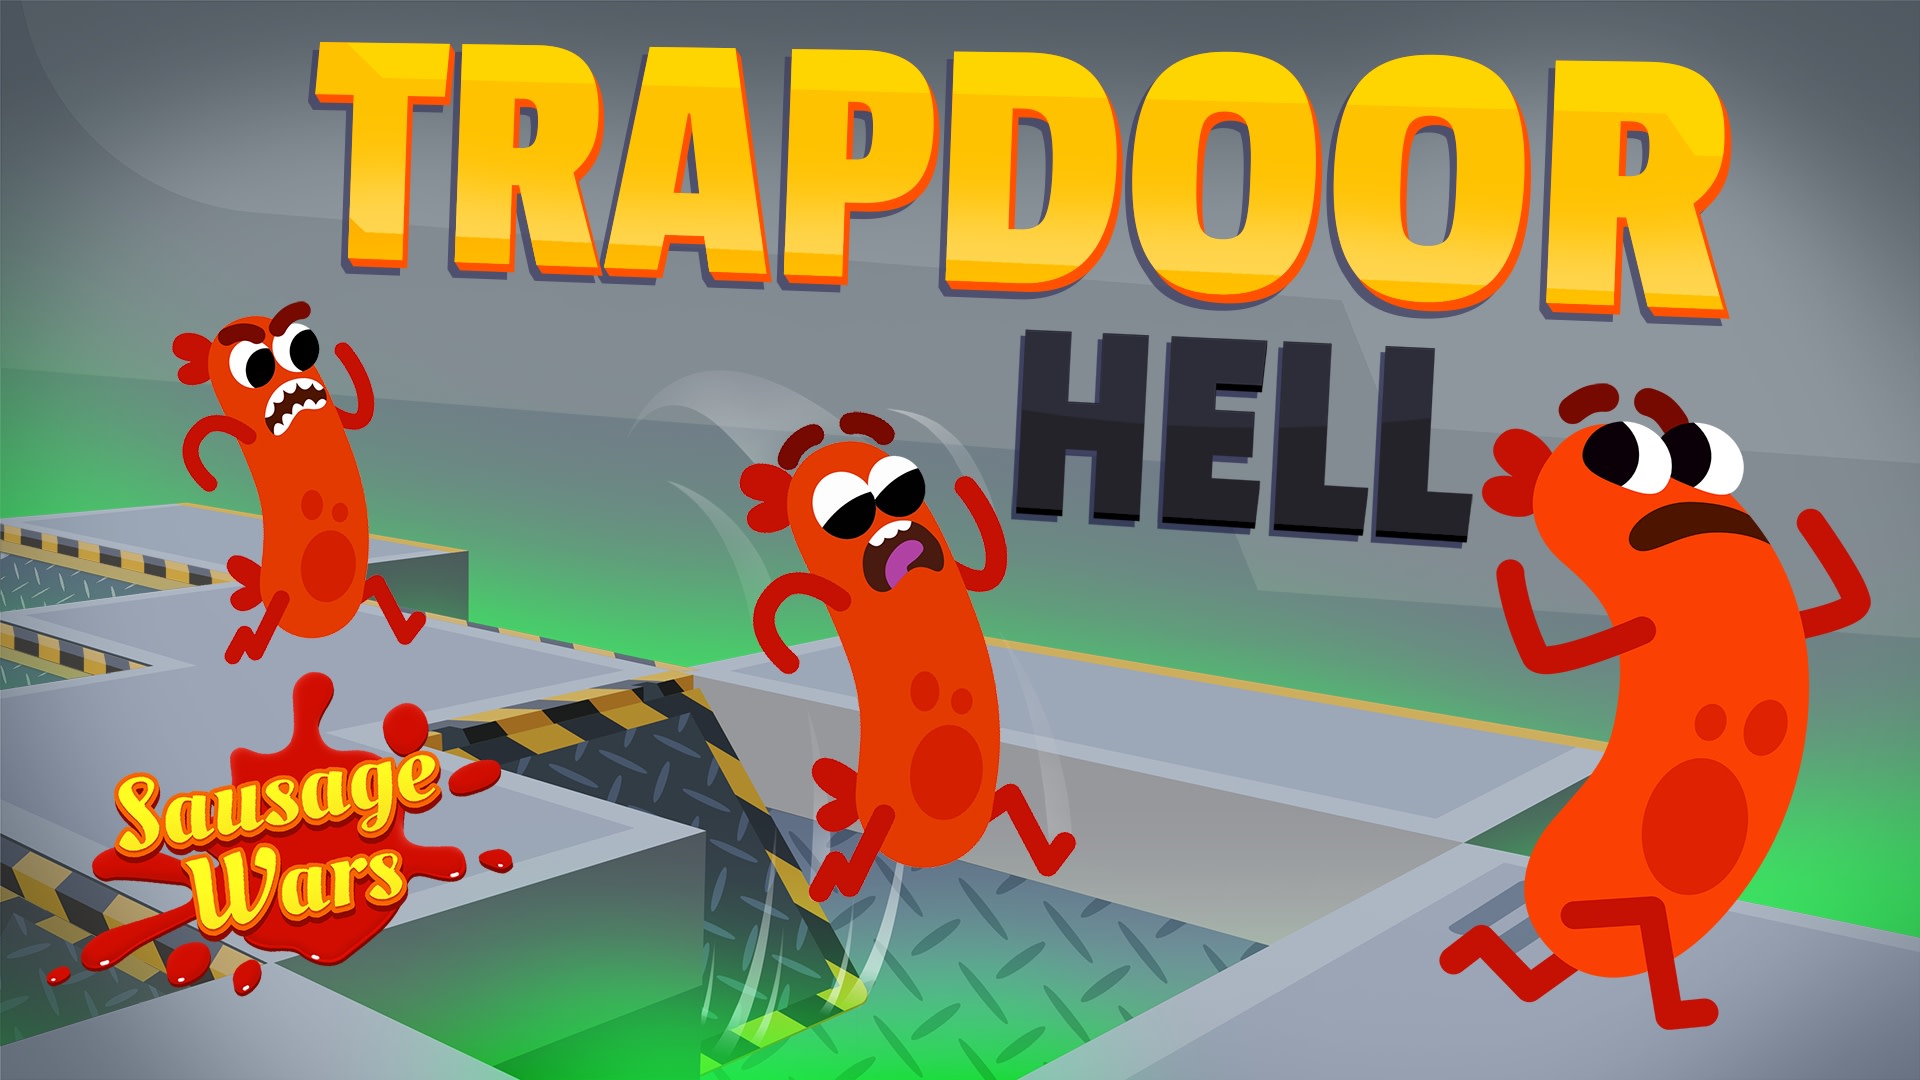 Sausage Wars: Trapdoor Hell